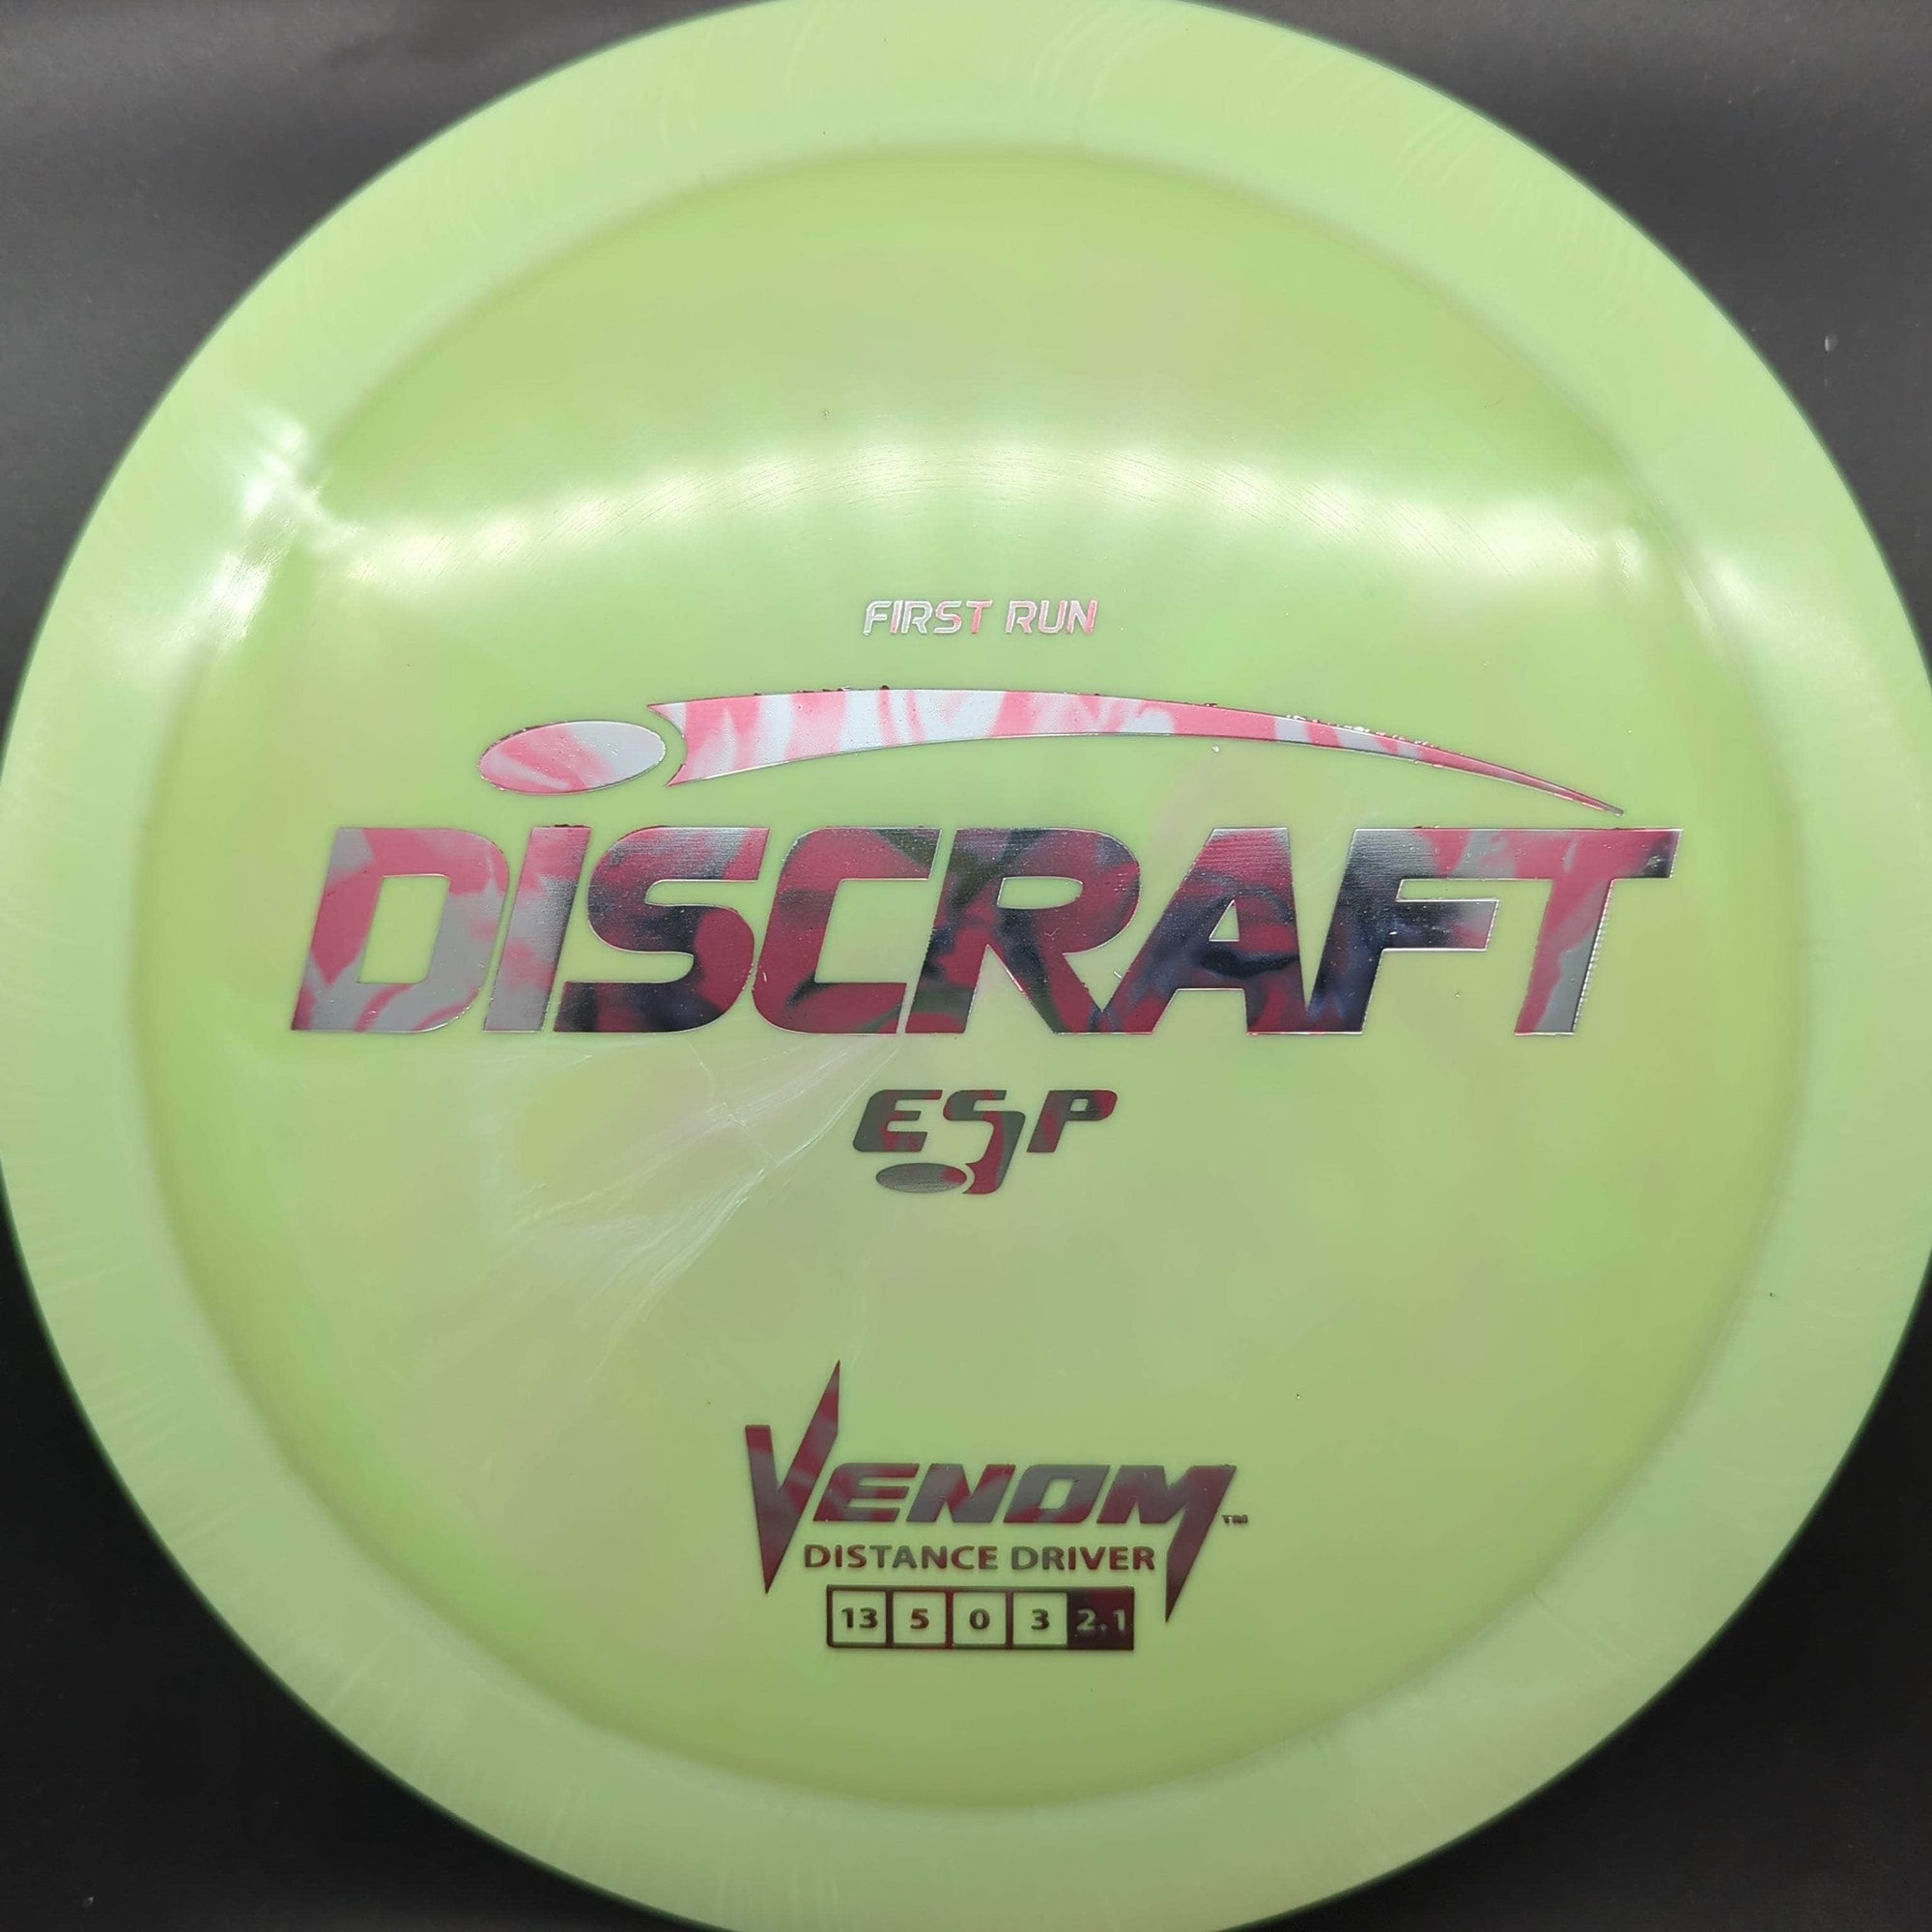 Discraft Distance Driver Venom, ESP, First Run